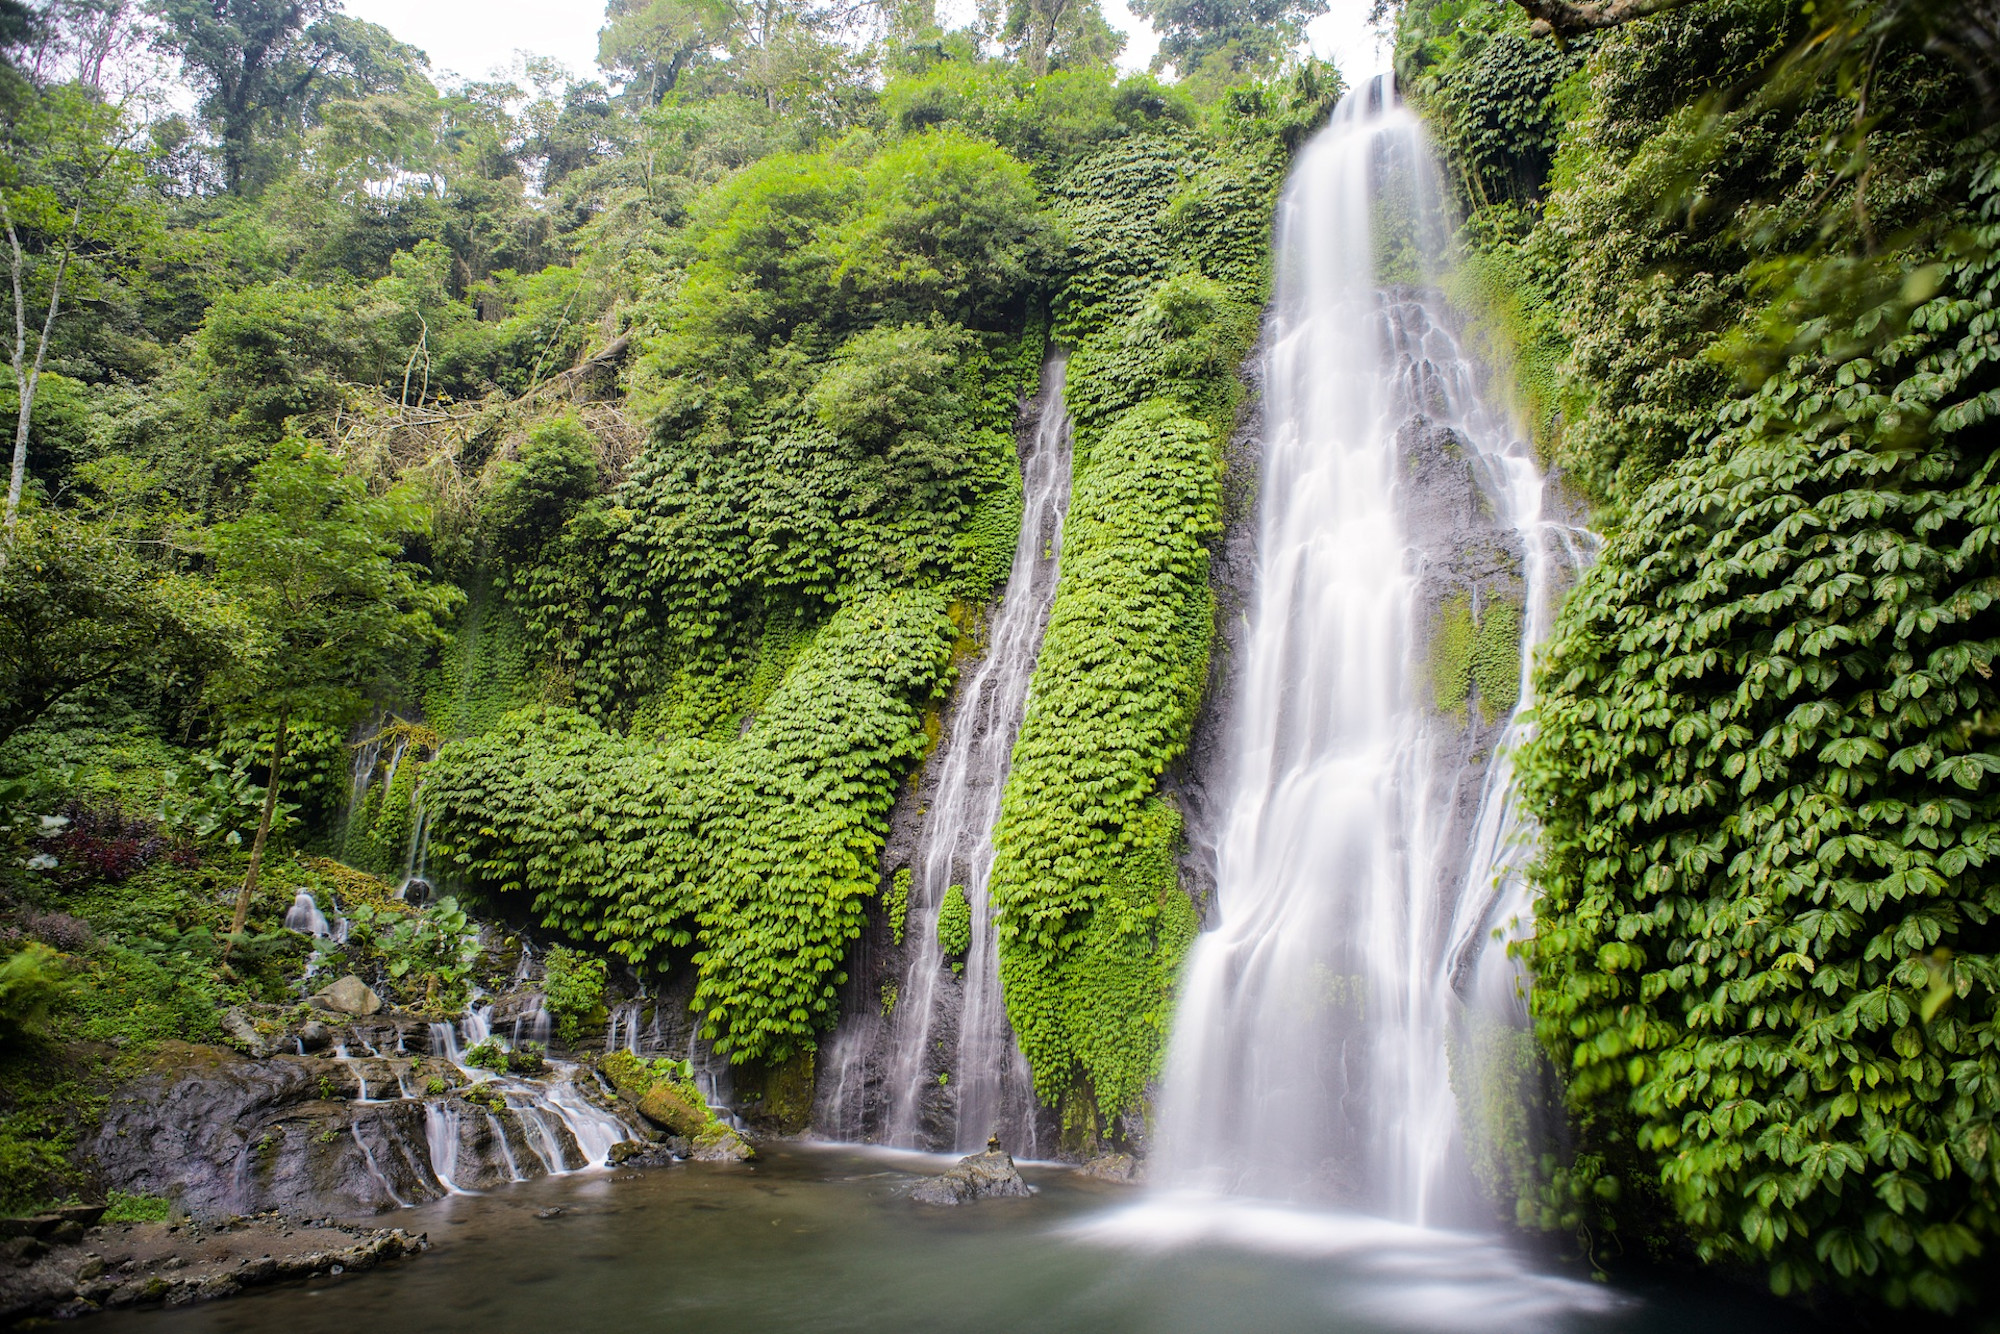  Cascades  Of Green Air Terjun Banyumala Bali  Watefall